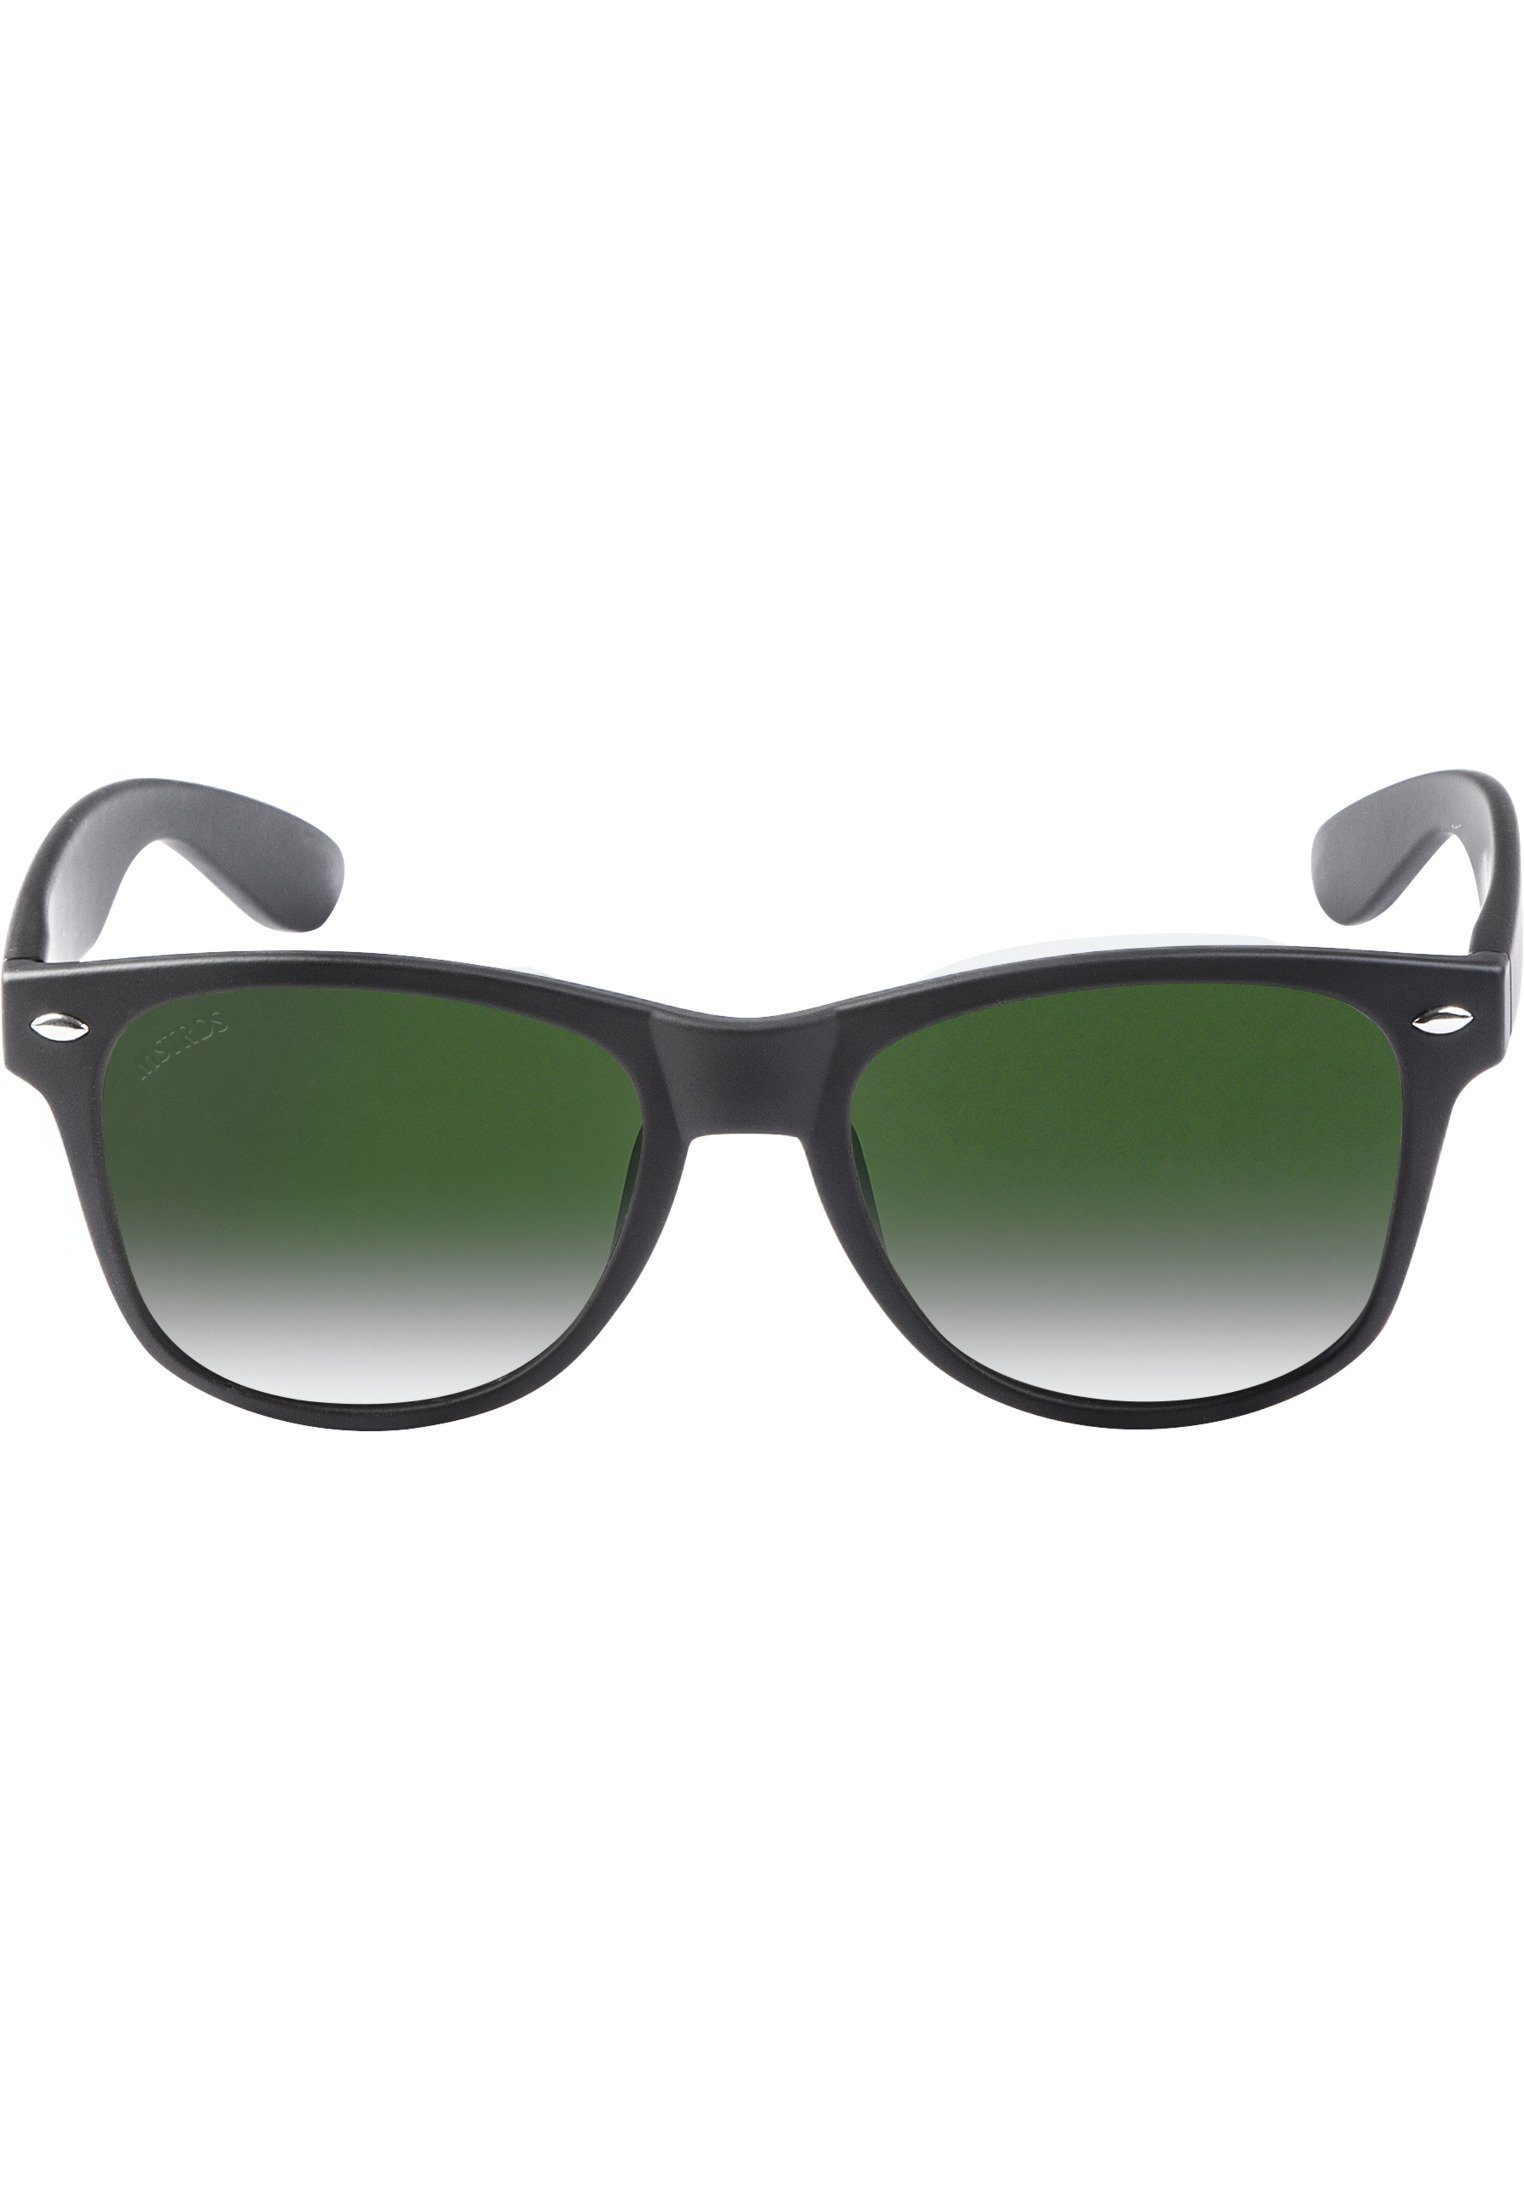 Sport auch Freien geeignet Sunglasses Youth, Accessoires Sonnenbrille für Likoma im Ideal MSTRDS